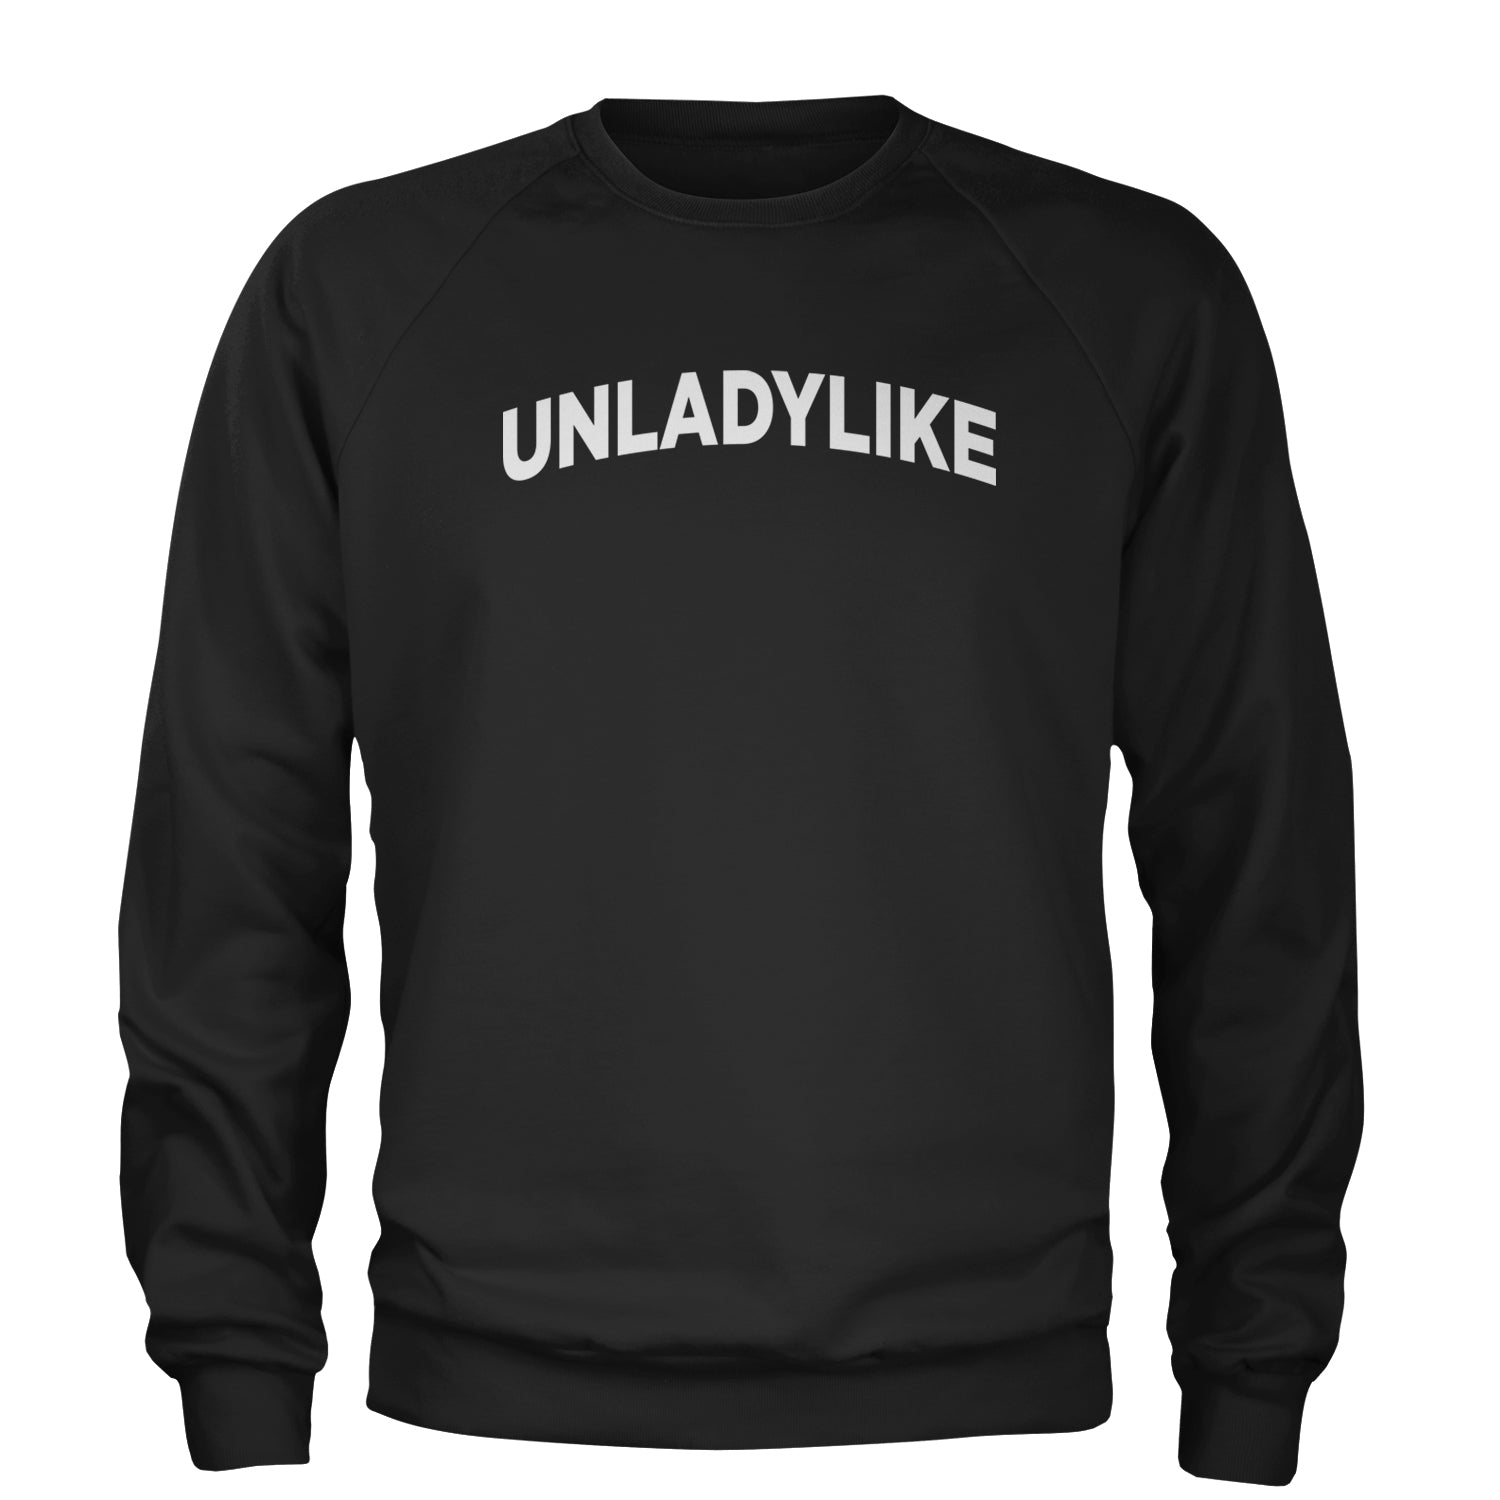 Unladylike Embrace Your Unique Strength Adult Crewneck Sweatshirt